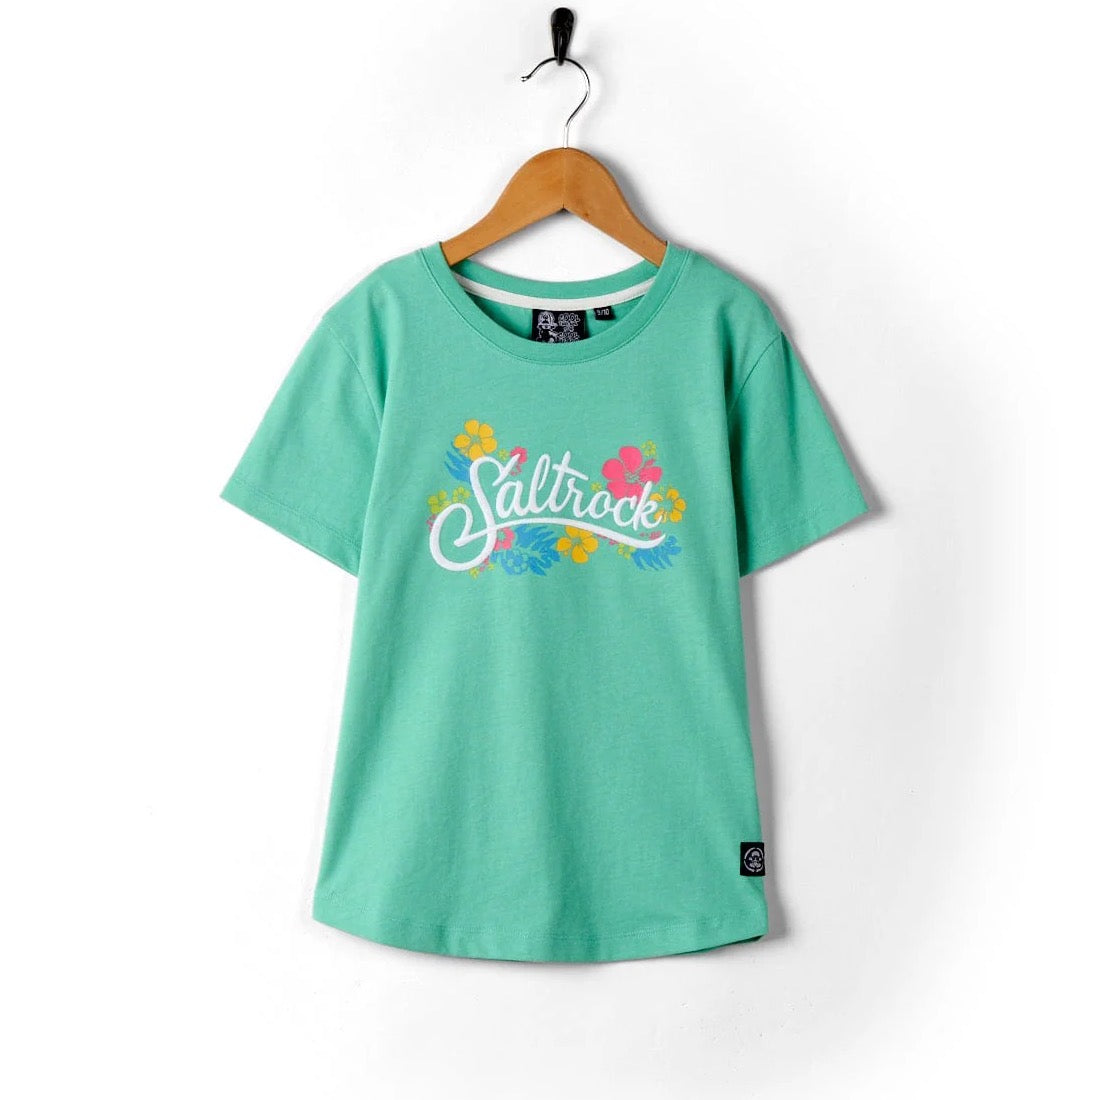 Saltrock Girls Tropic T-Shirt Green